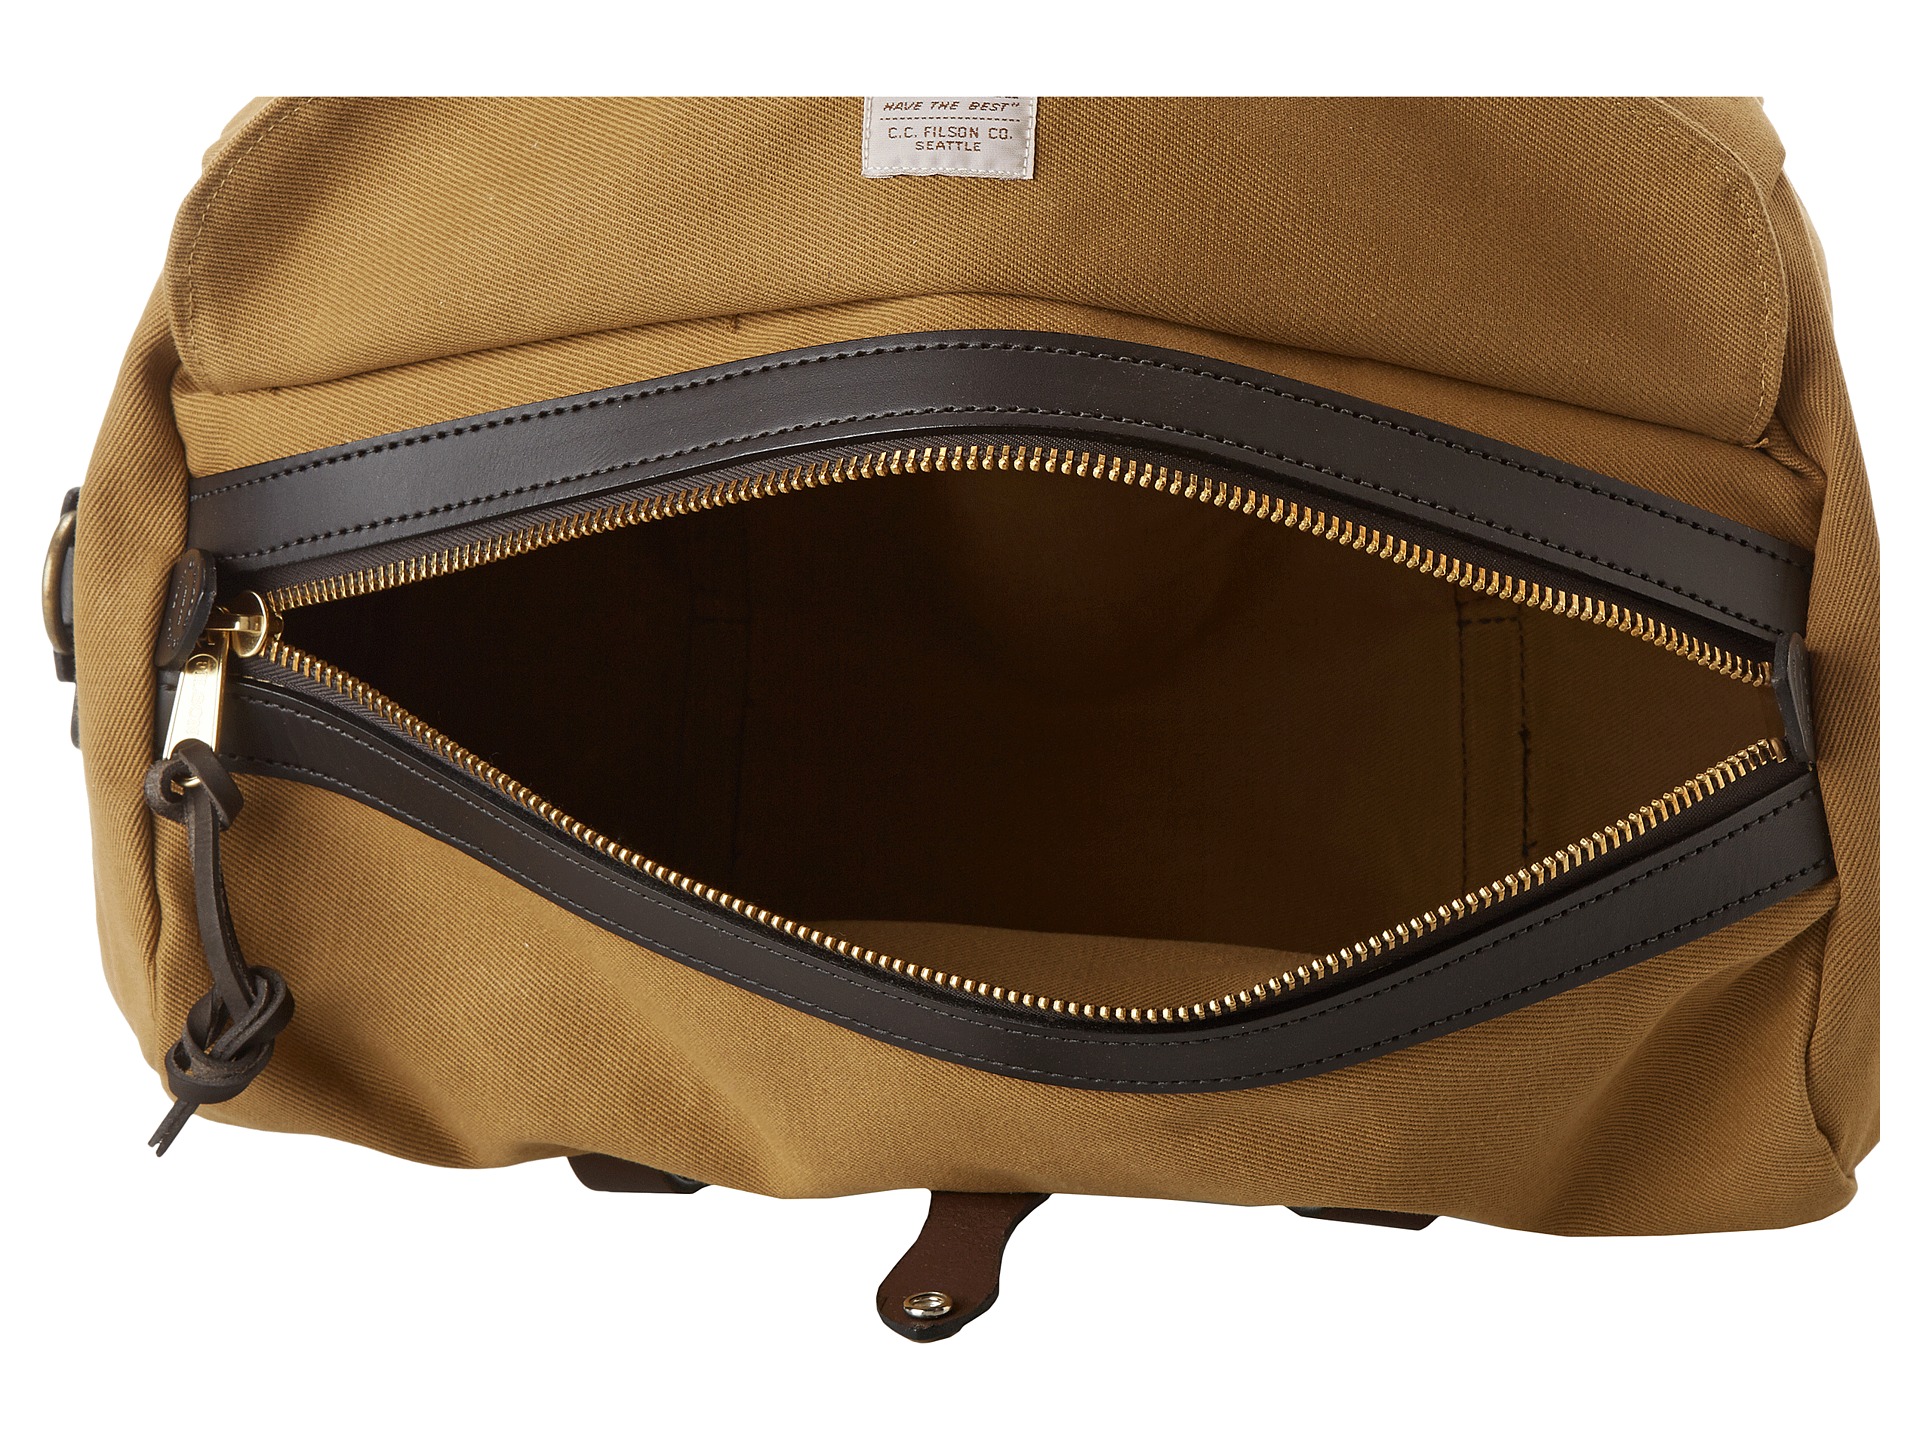 Filson Small Duffle Bag Tan - www.neverfullmm.com Free Shipping BOTH Ways